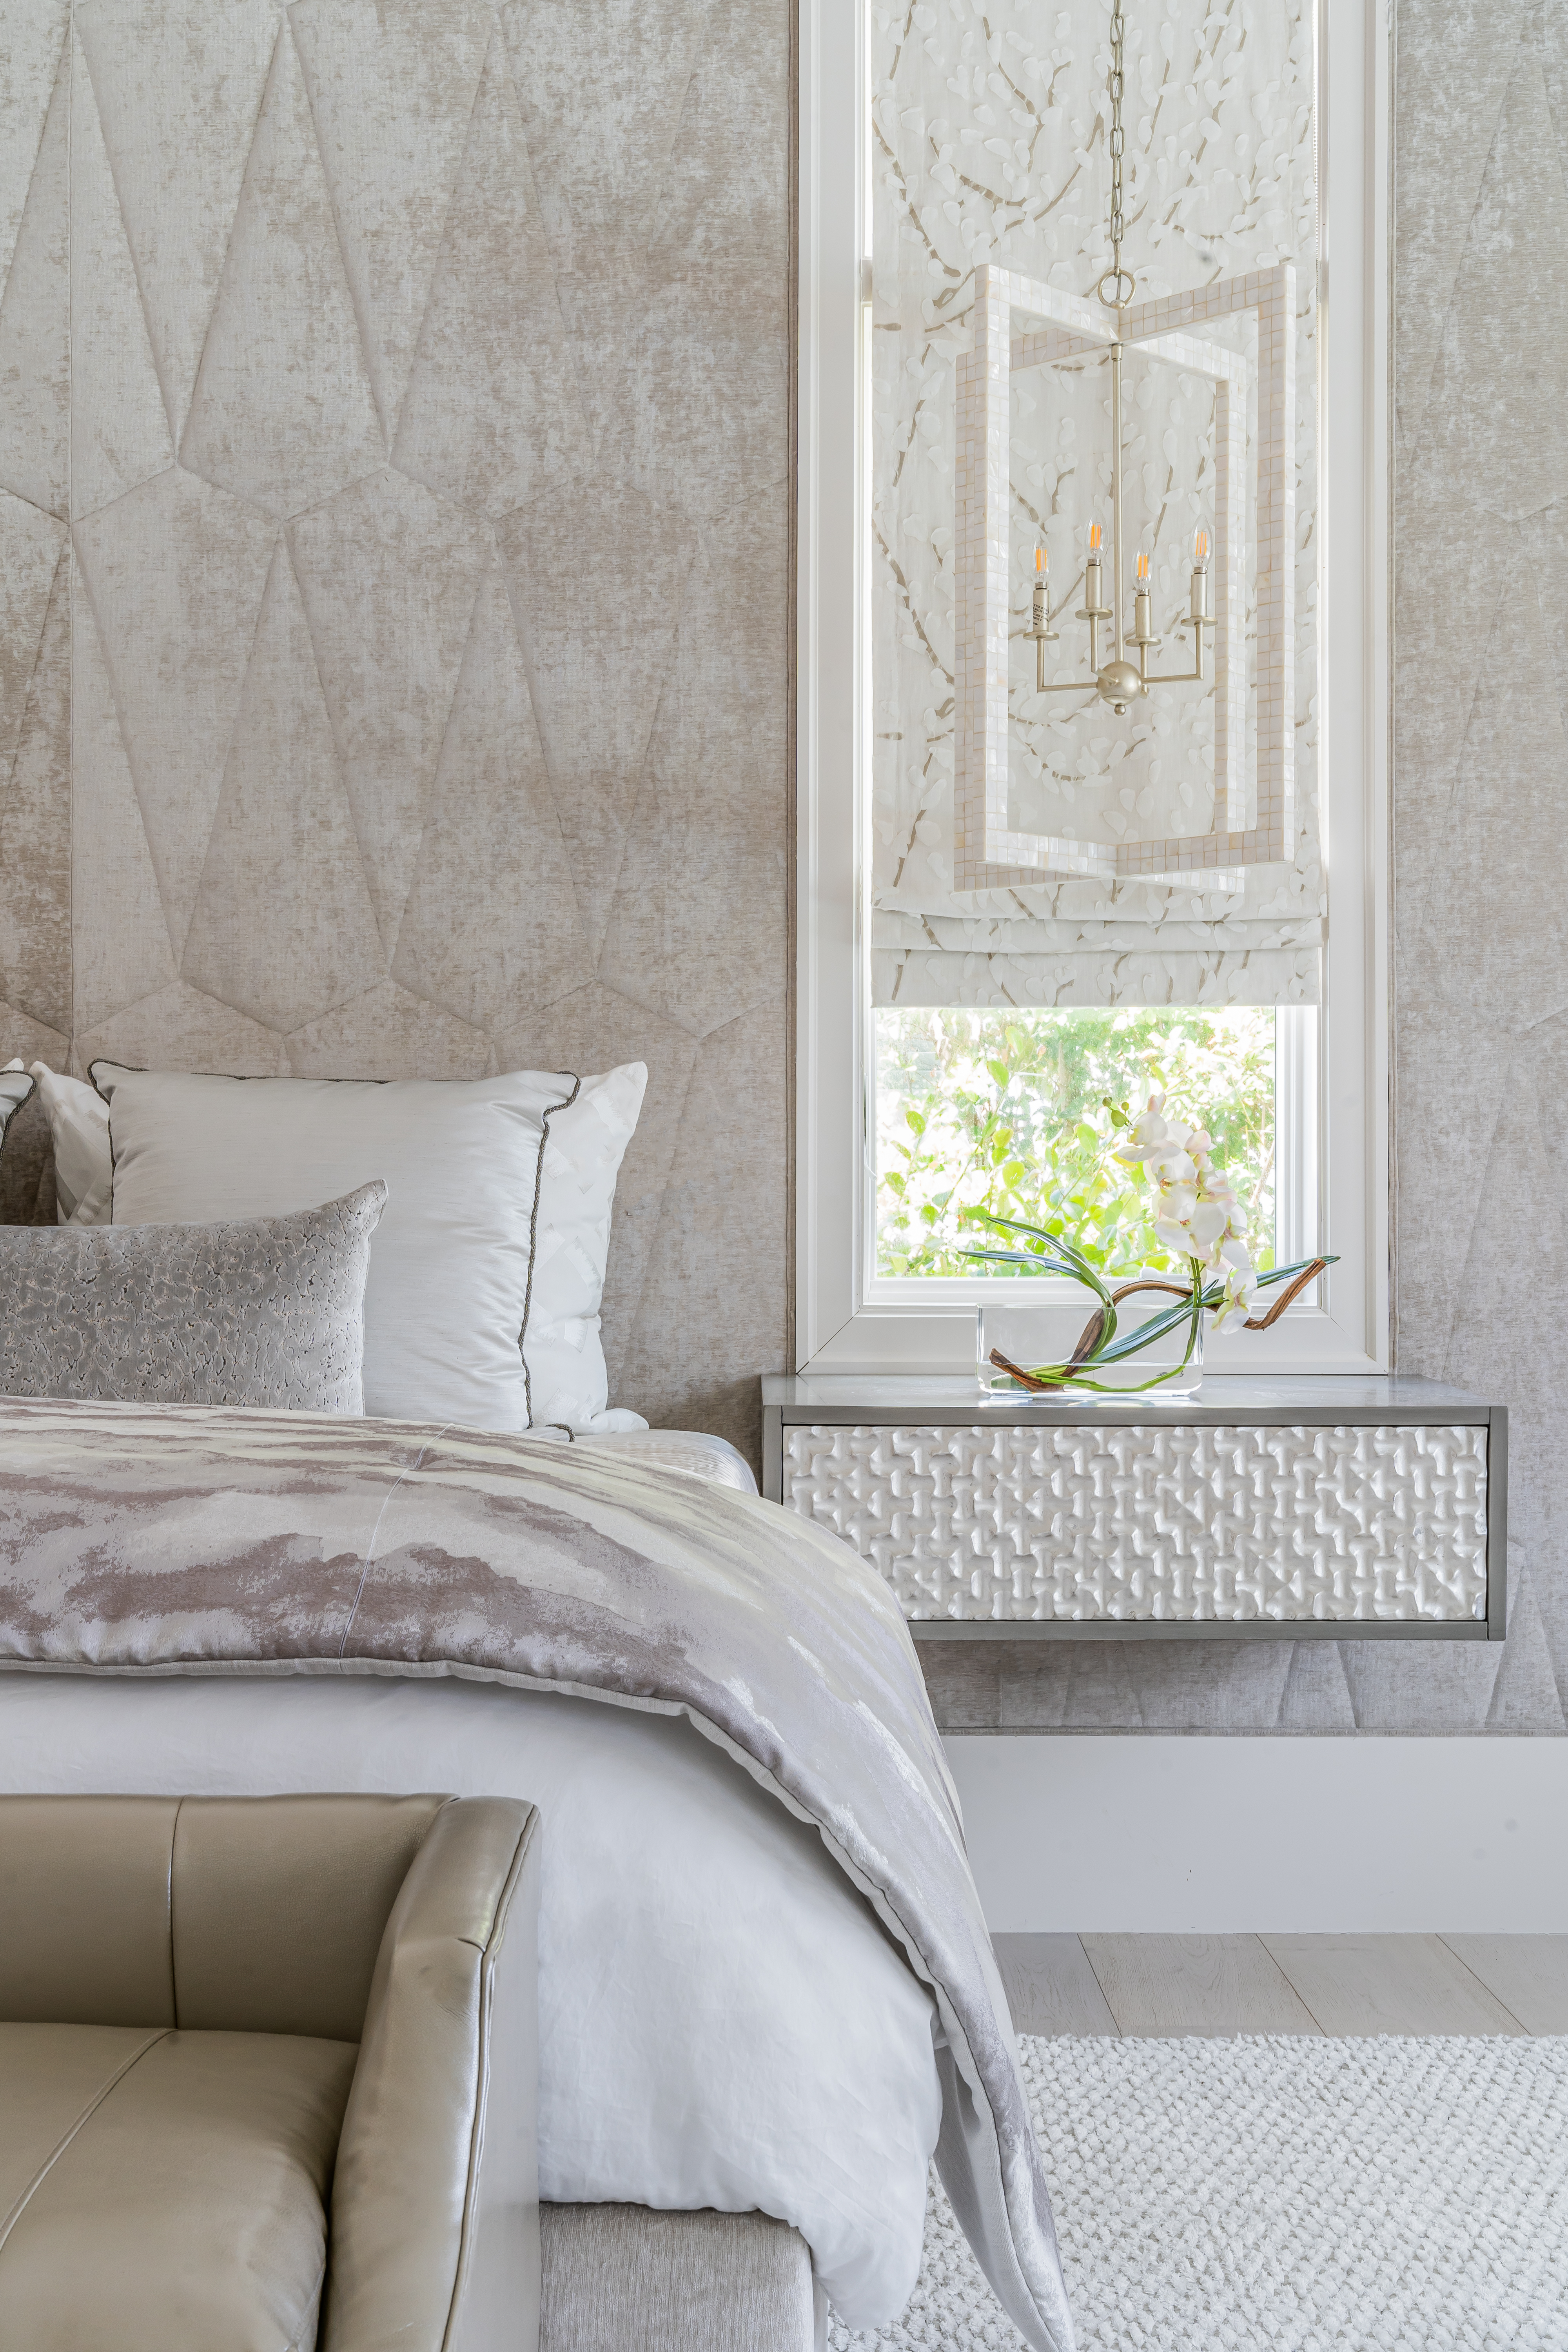 A coastal contemporary primary bedroom design with a neutral palette, designed by Florida interior designer Brooke Meyer of Gulfshore Interior Design